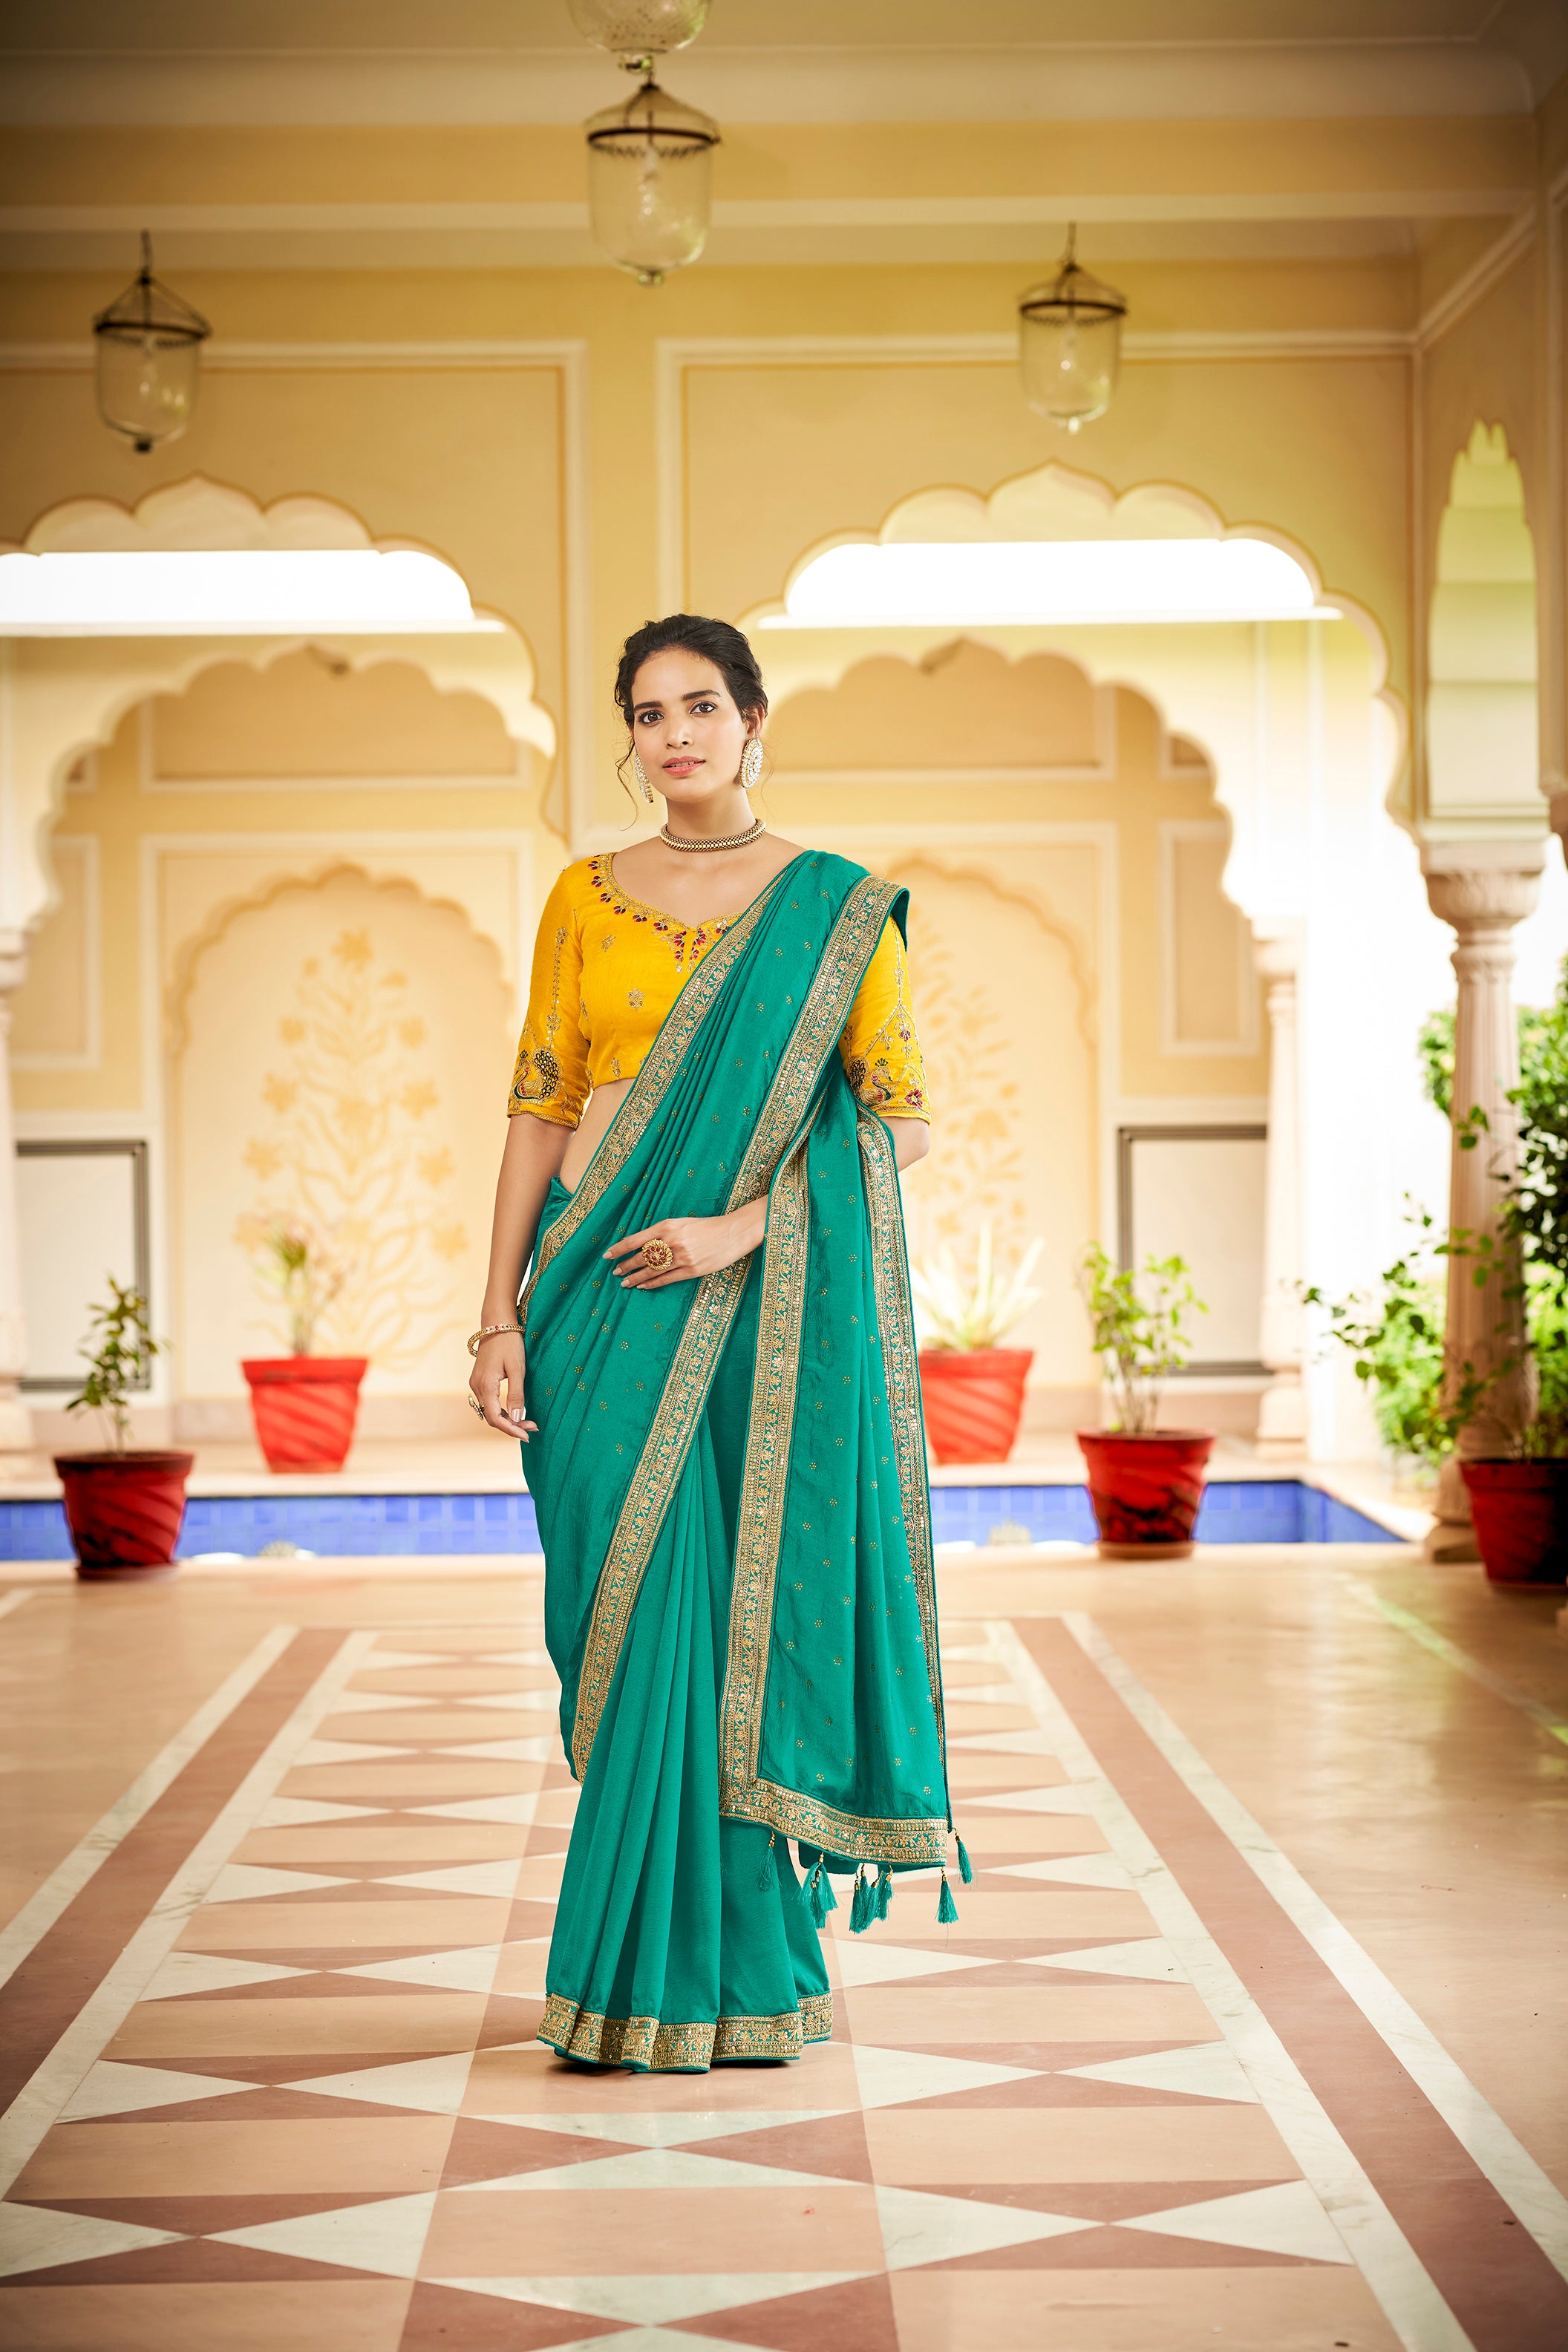 Firozi Color Handloom Raw Silk Saree - Pariha Collection Yf#23951, हैंडलूम  रेशम साड़ी - Ozone Shield, Mumbai | ID: 2851232207697